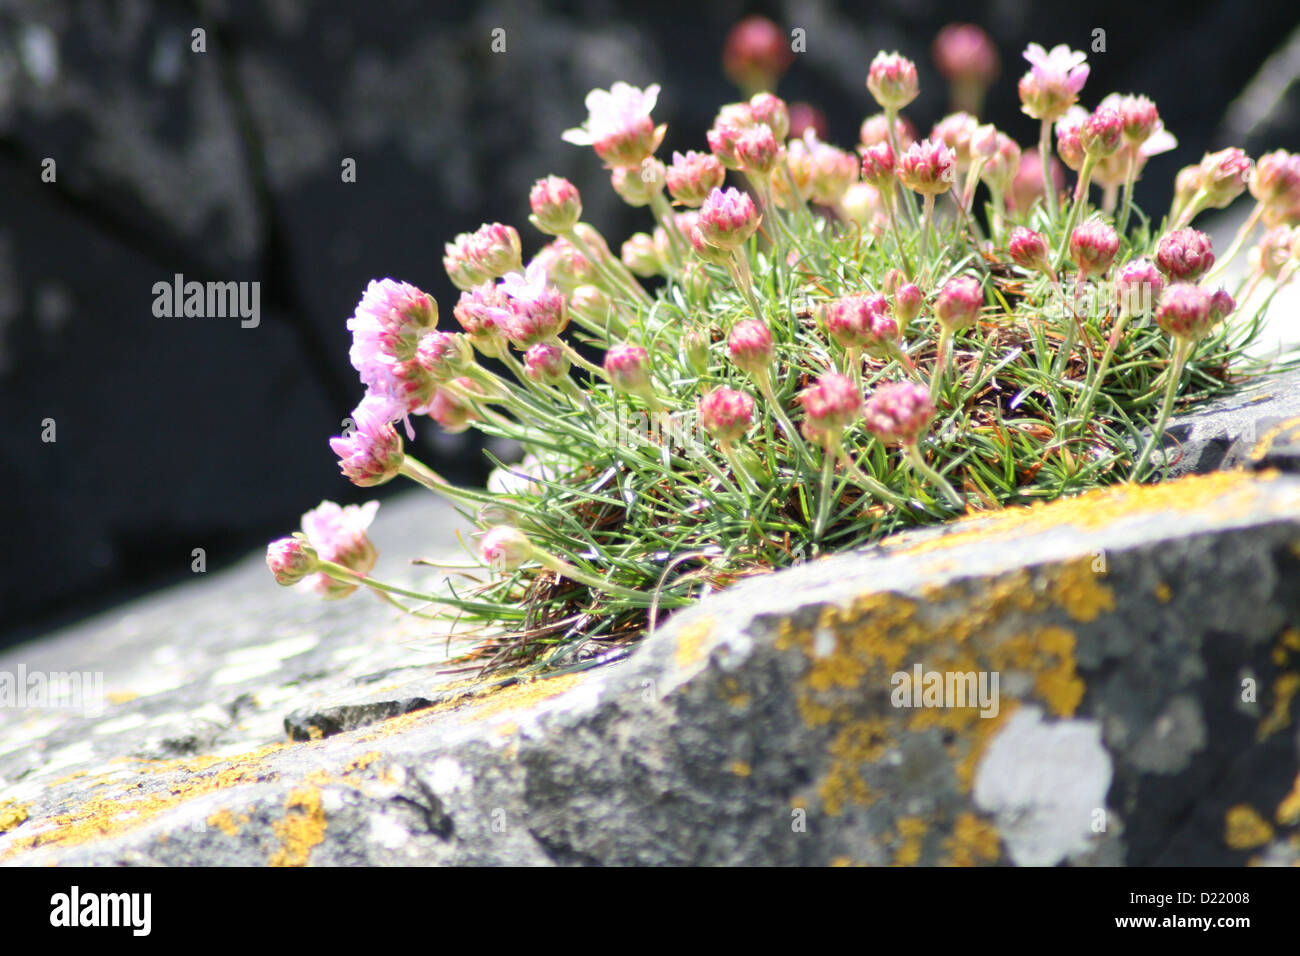 Pretty flowers growing on rocks Stock Photo